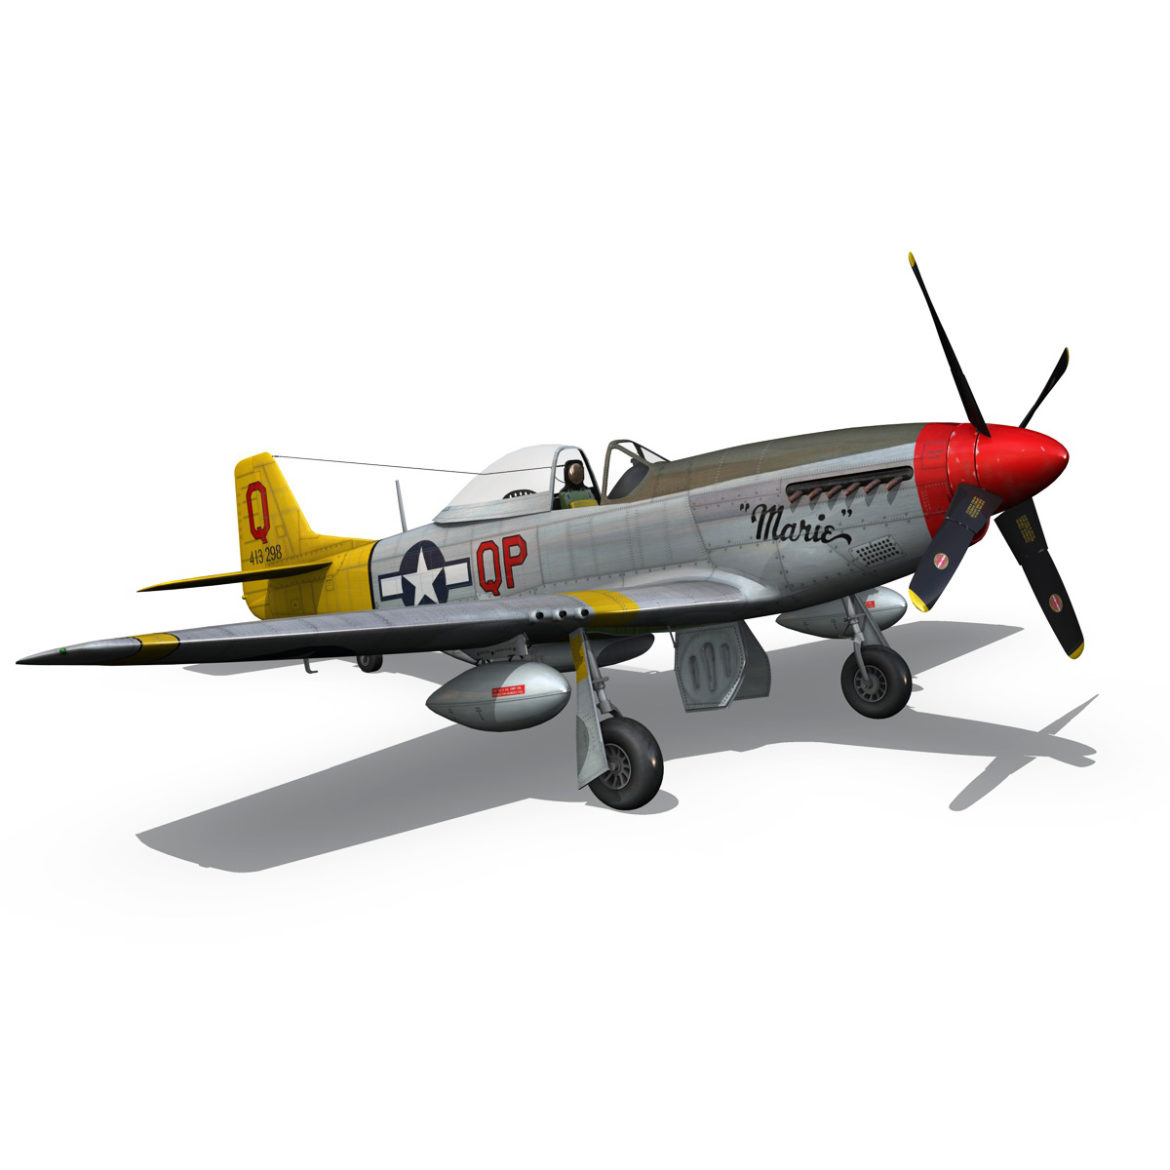 north american p-51d mustang – marie 3d model fbx c4d lwo obj 294311